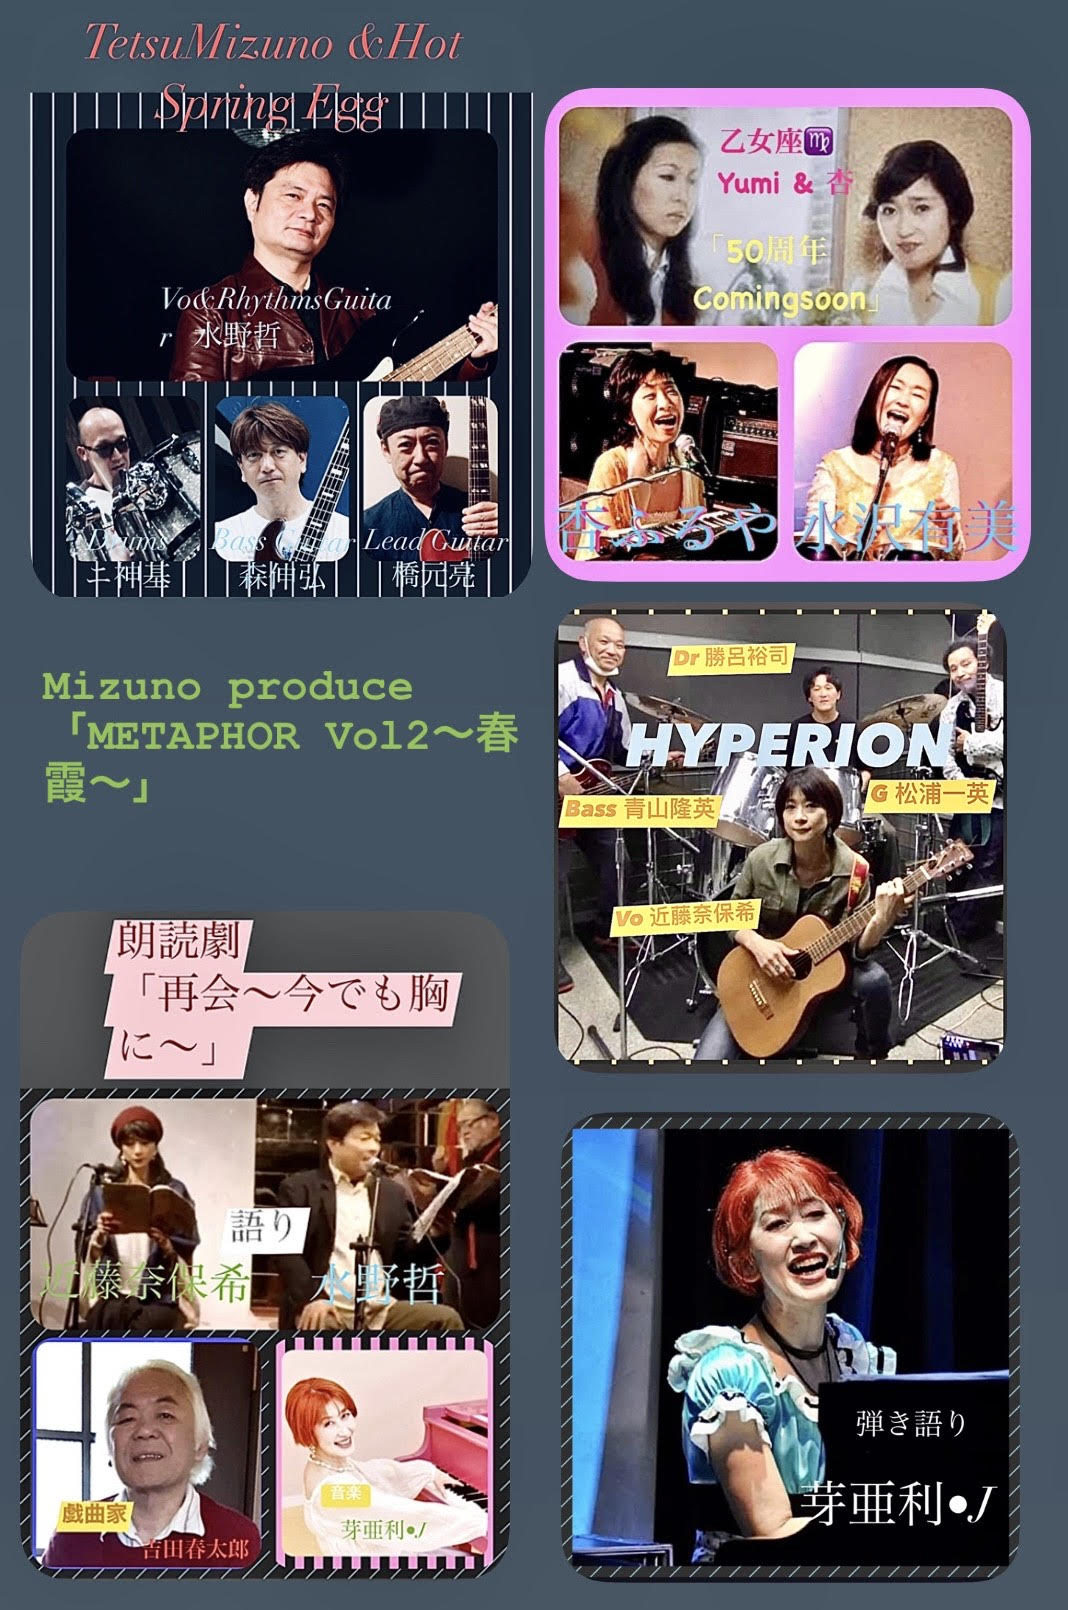 Mizuno produce「METAPHOR Vol2〜春霞〜」